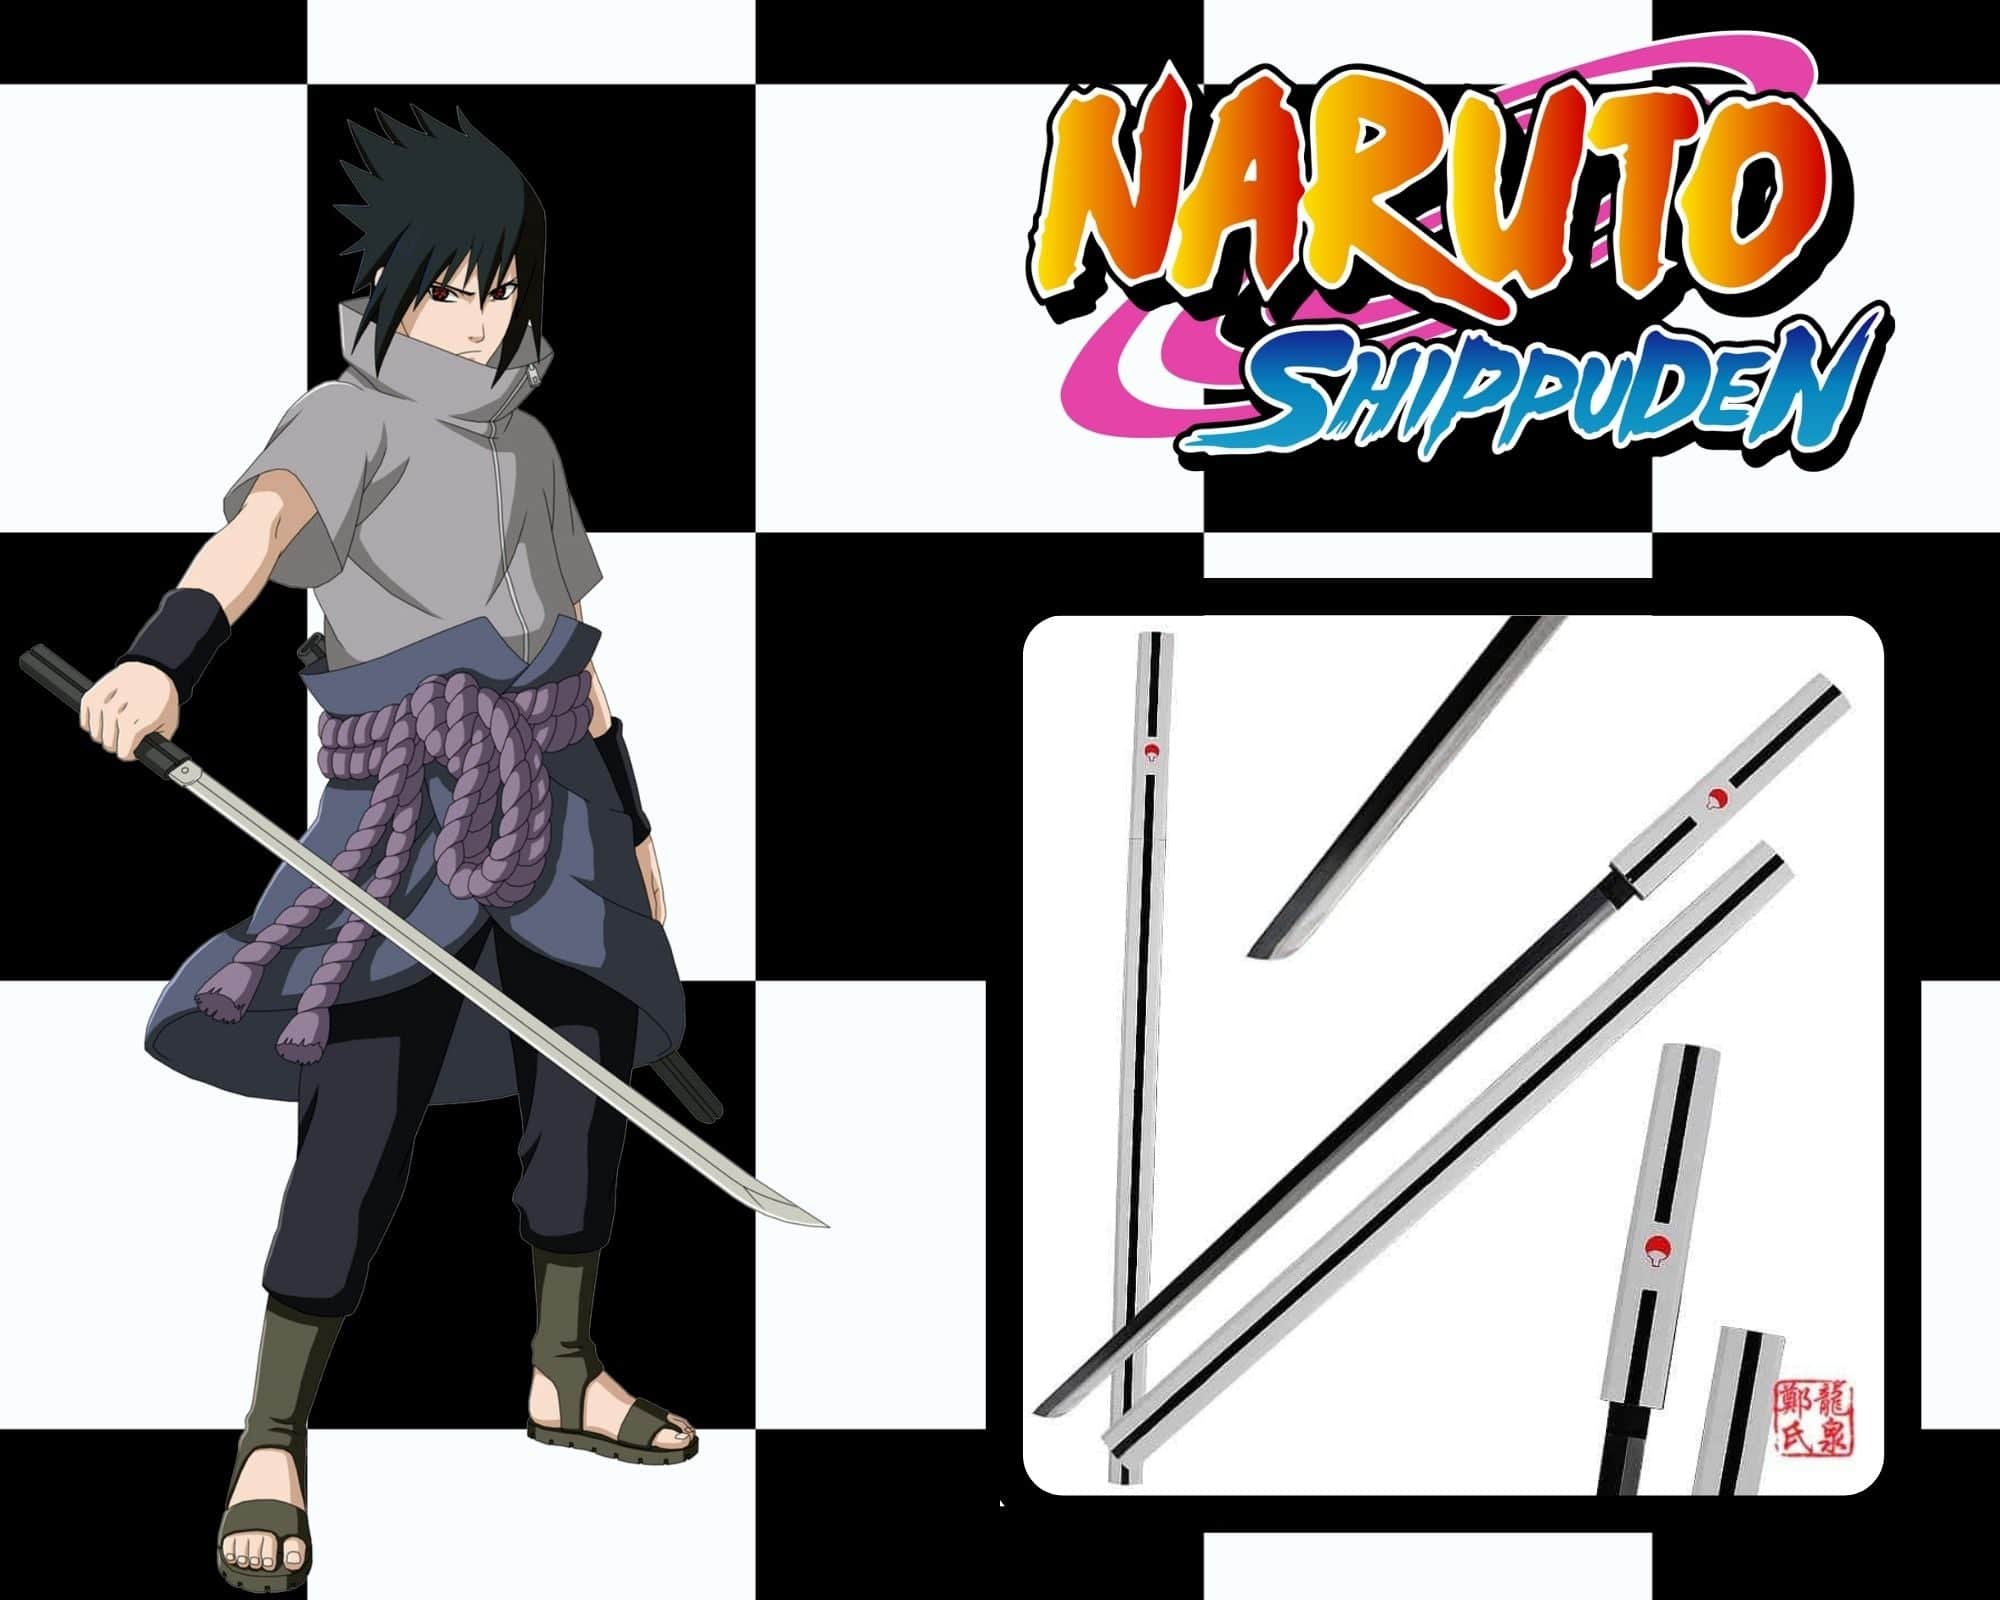 Épée de cosplay sasuke, katana sasuke